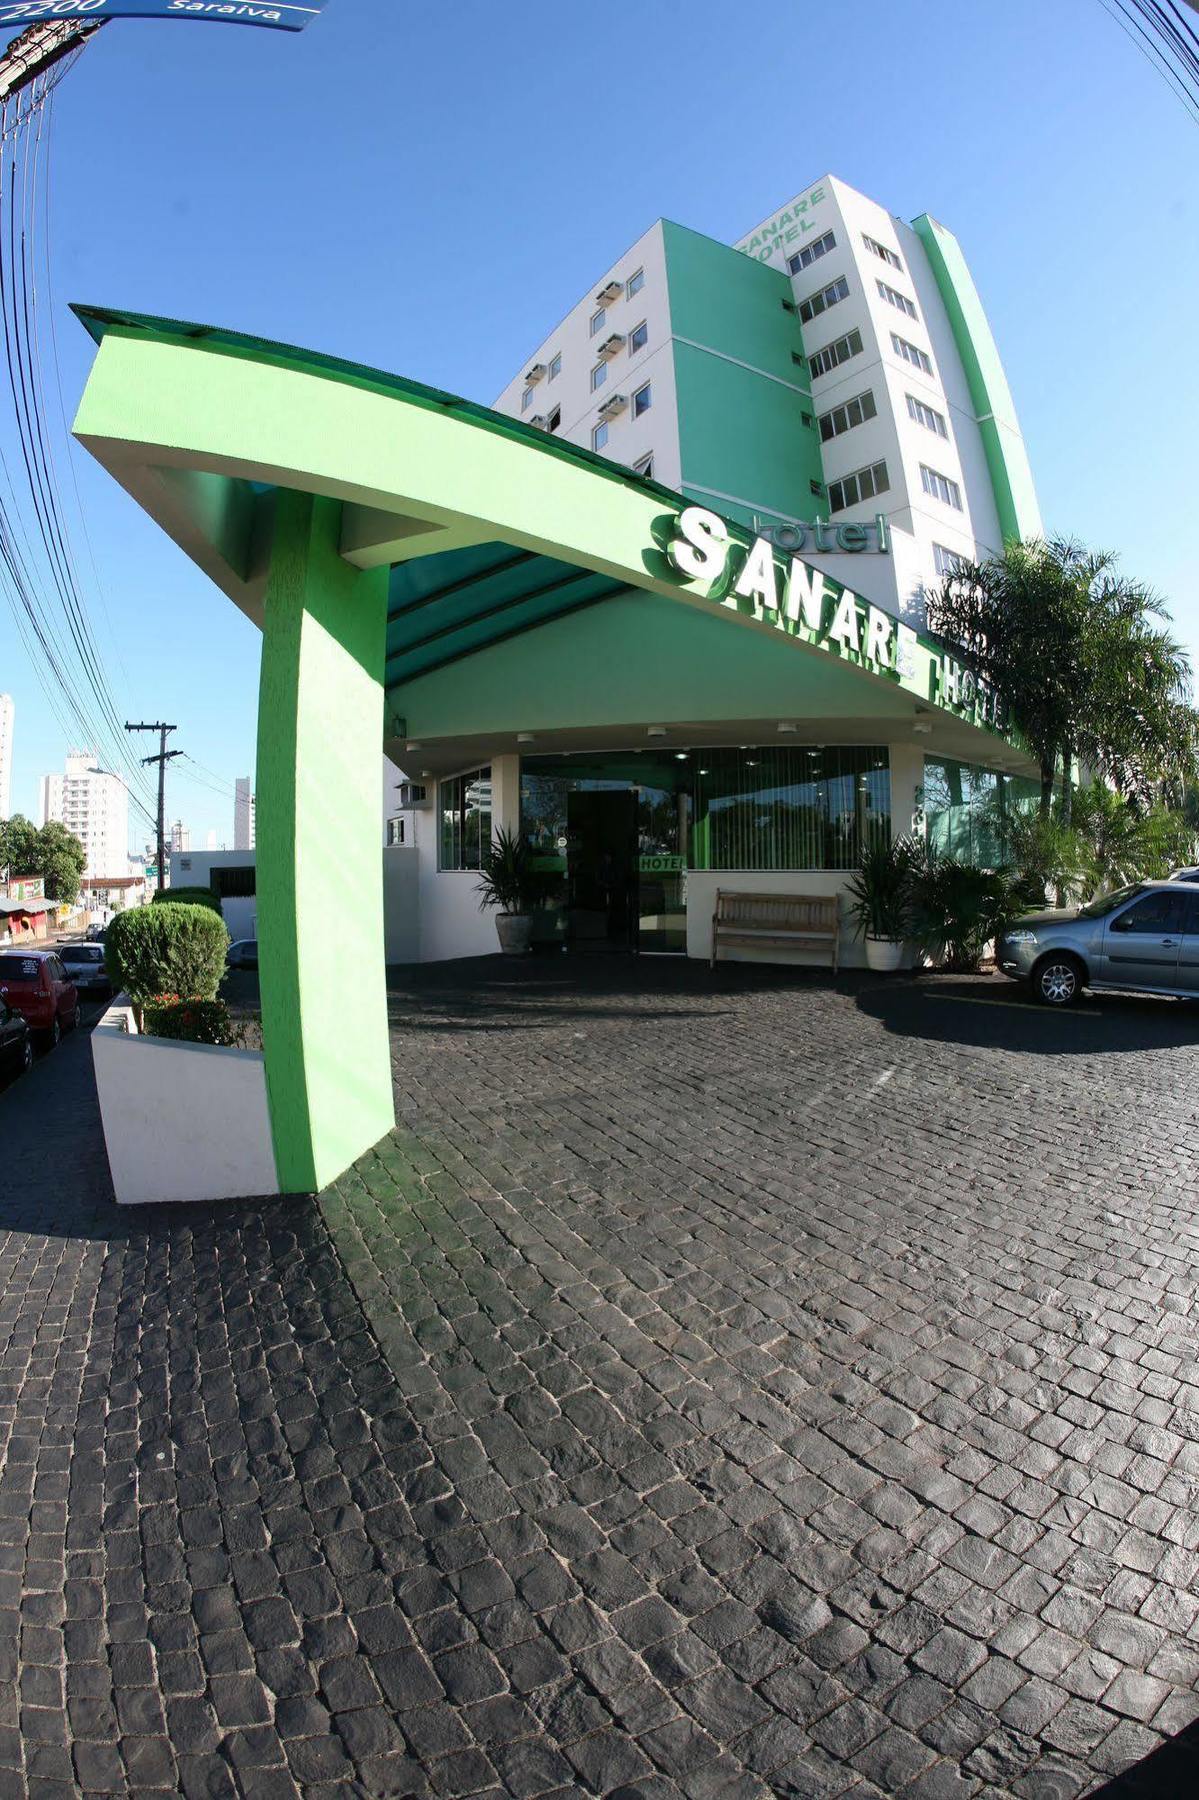 Sanare Hotel Uberlandia Exterior photo